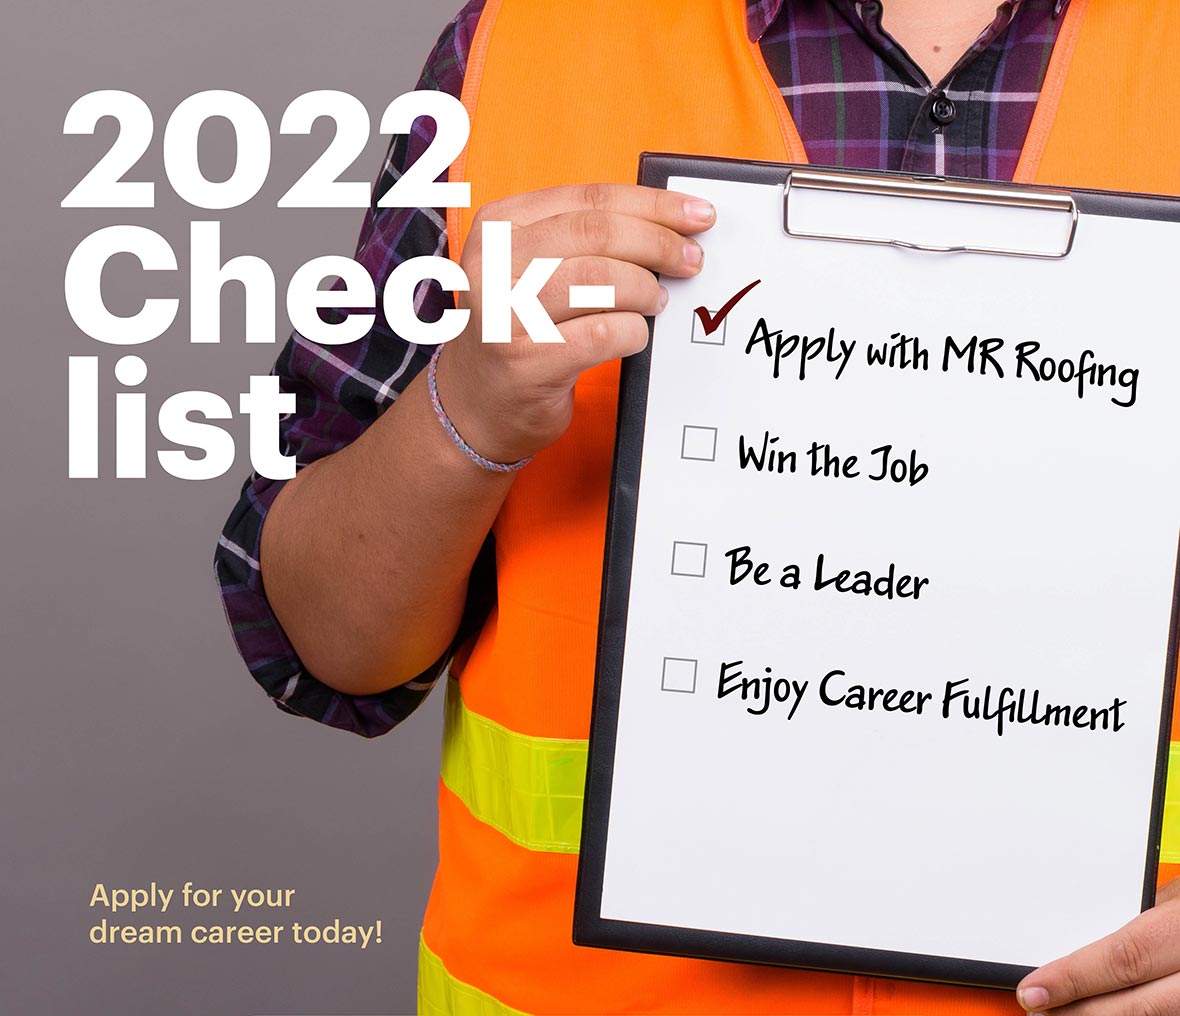 2022 checklist: apply, win, be a leader, enjoy fulfillment